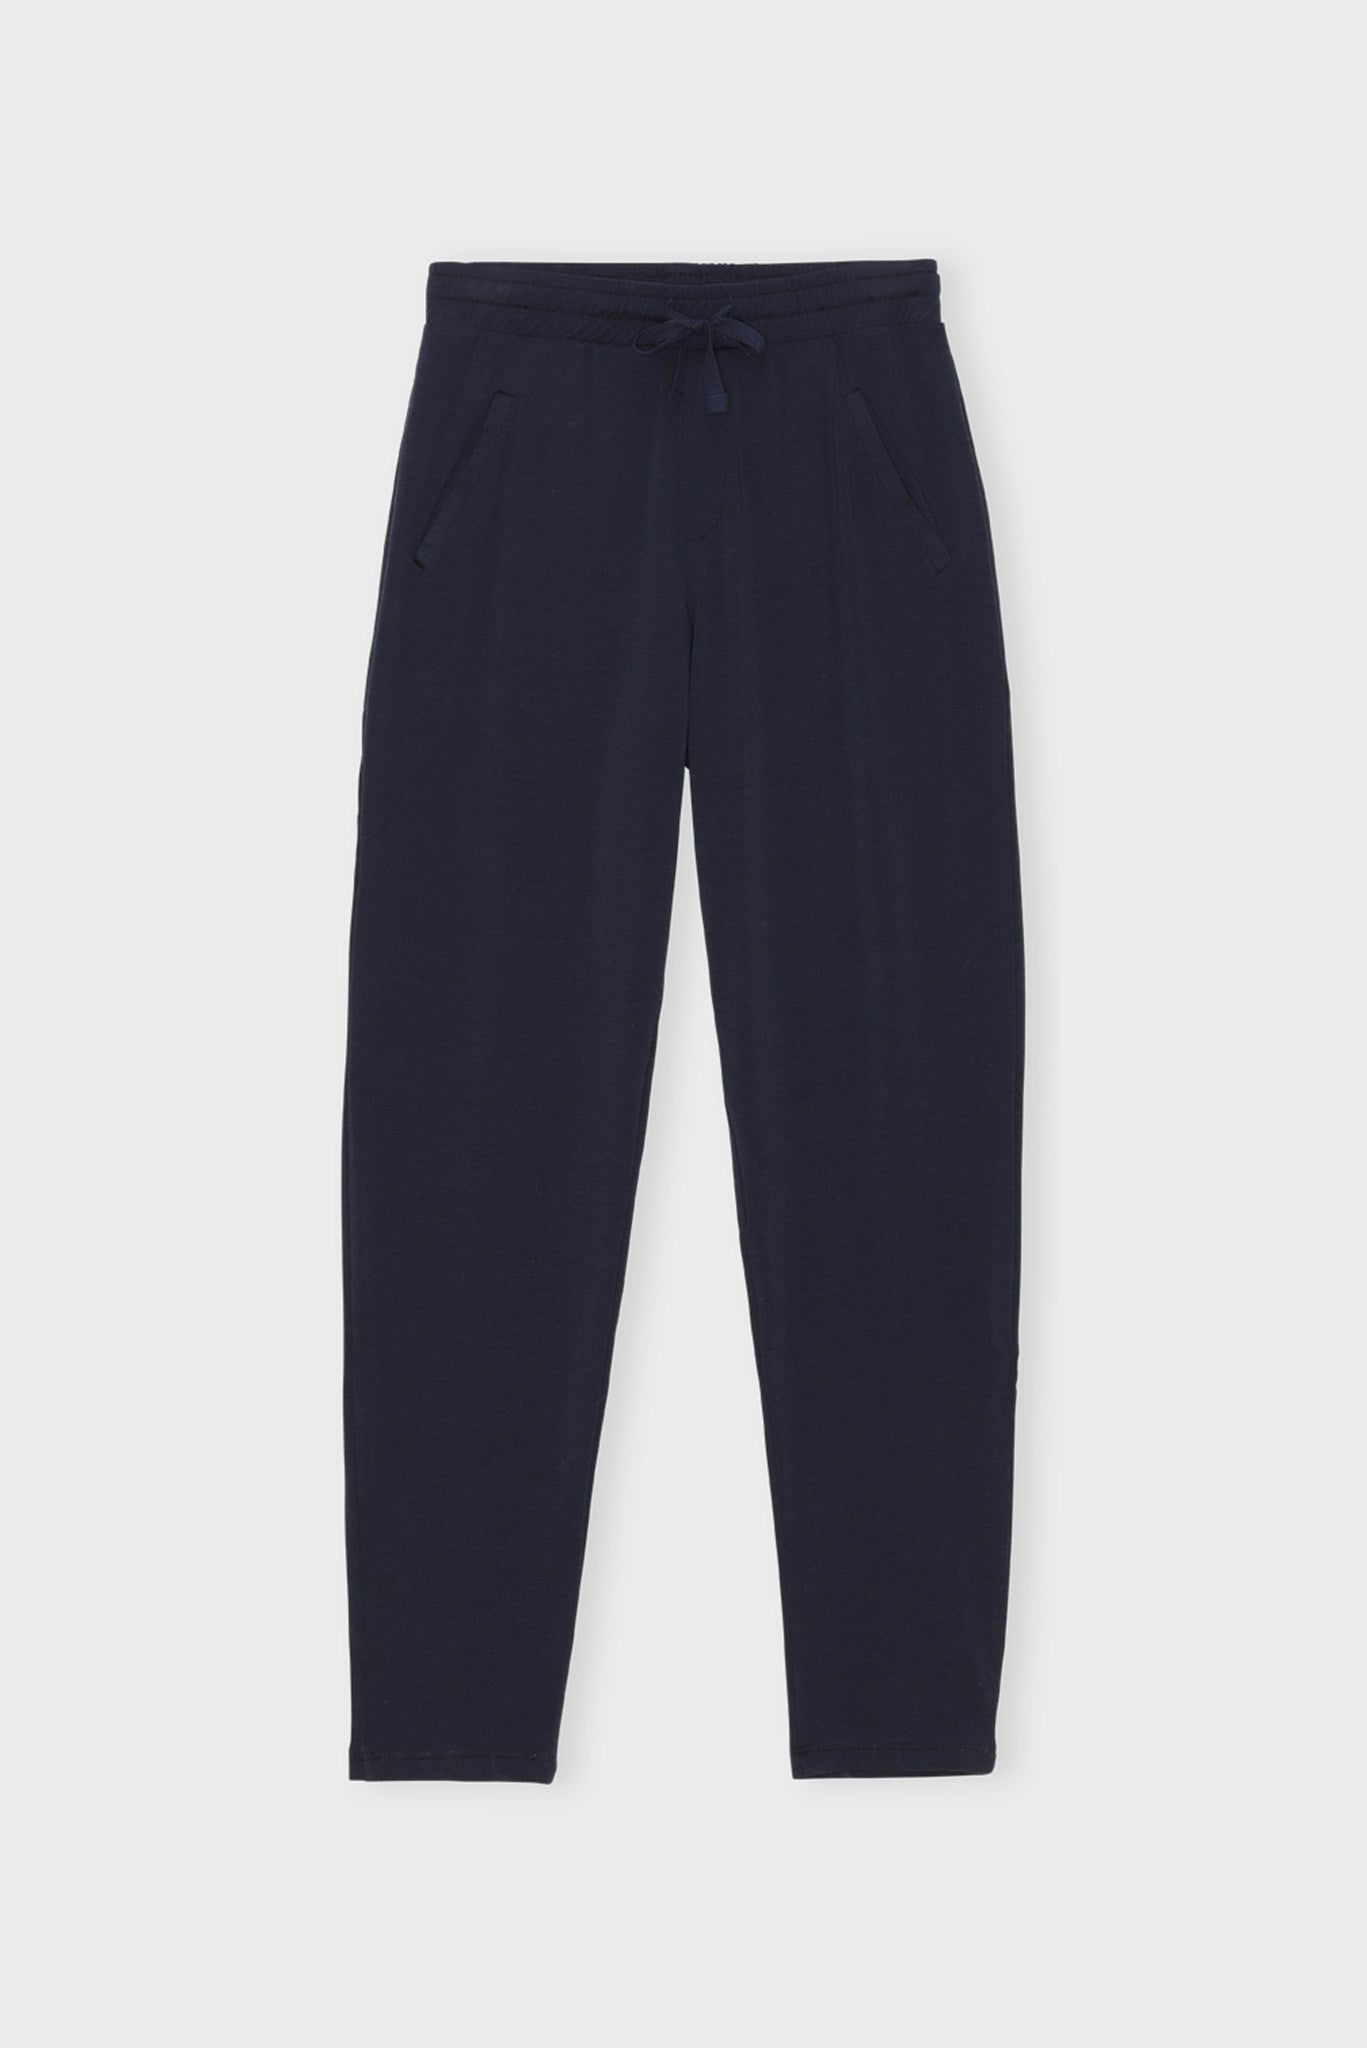 new fly pants lyocell I Buy pants online – moshi moshi mind